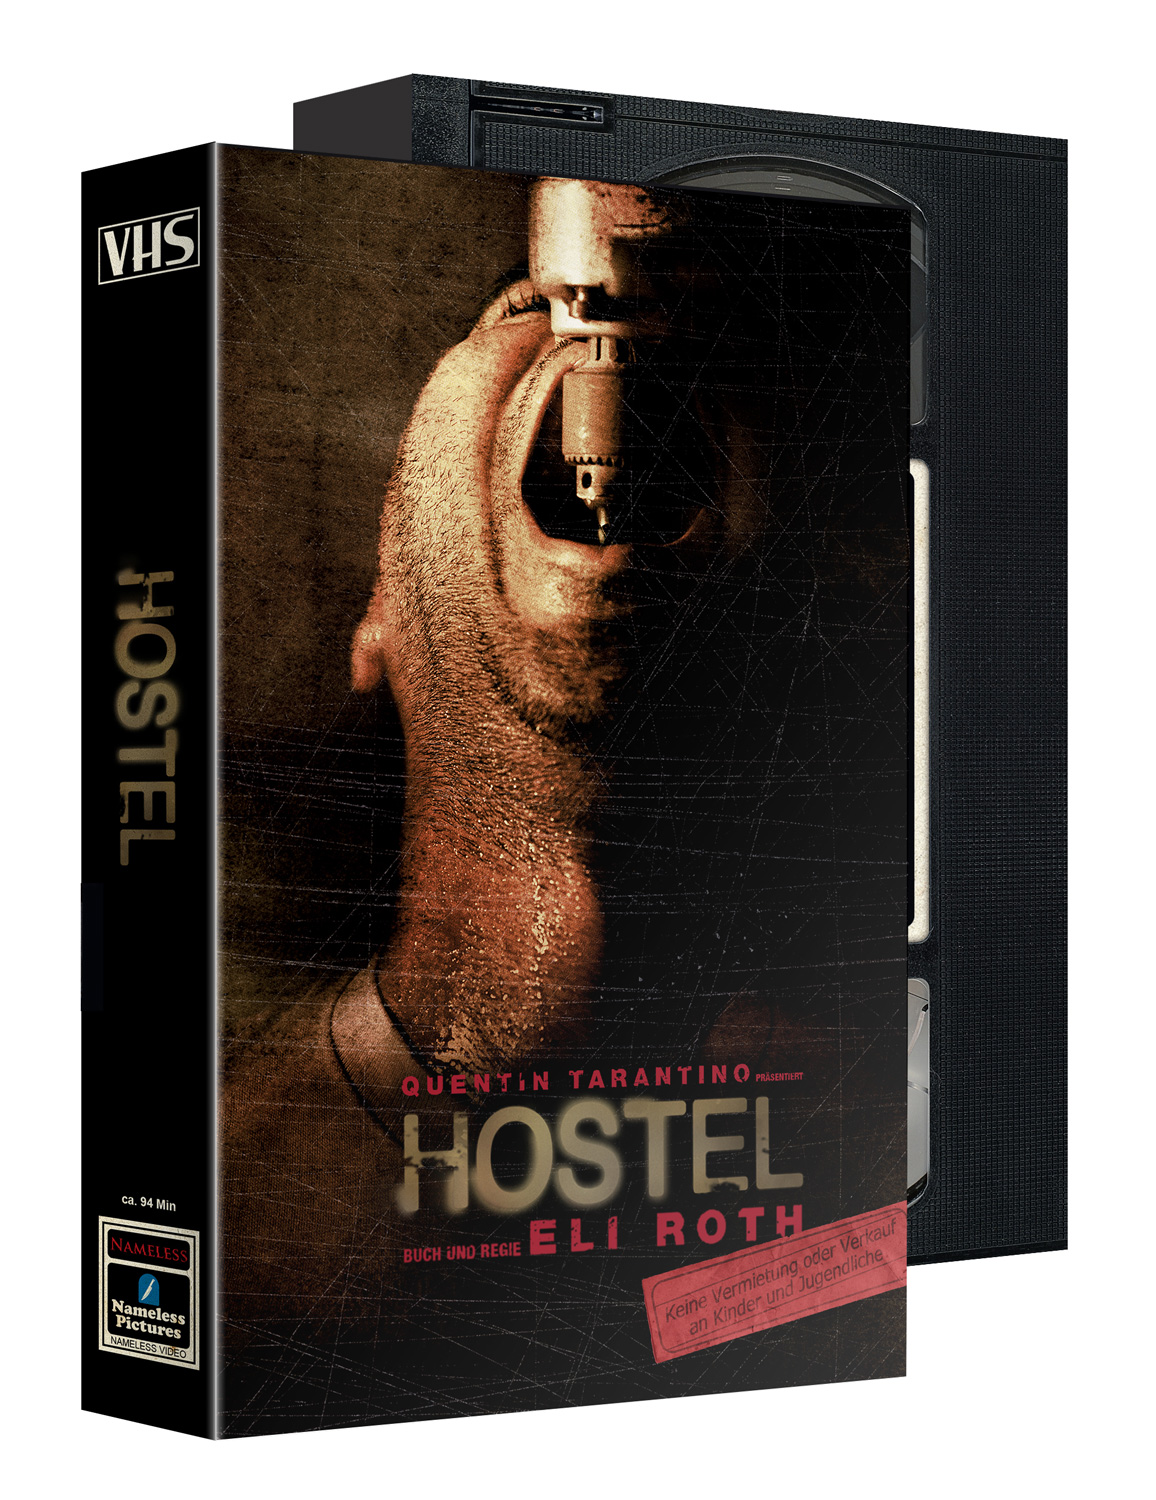 HOSTEL VHS VINTAGE SLIPCASE